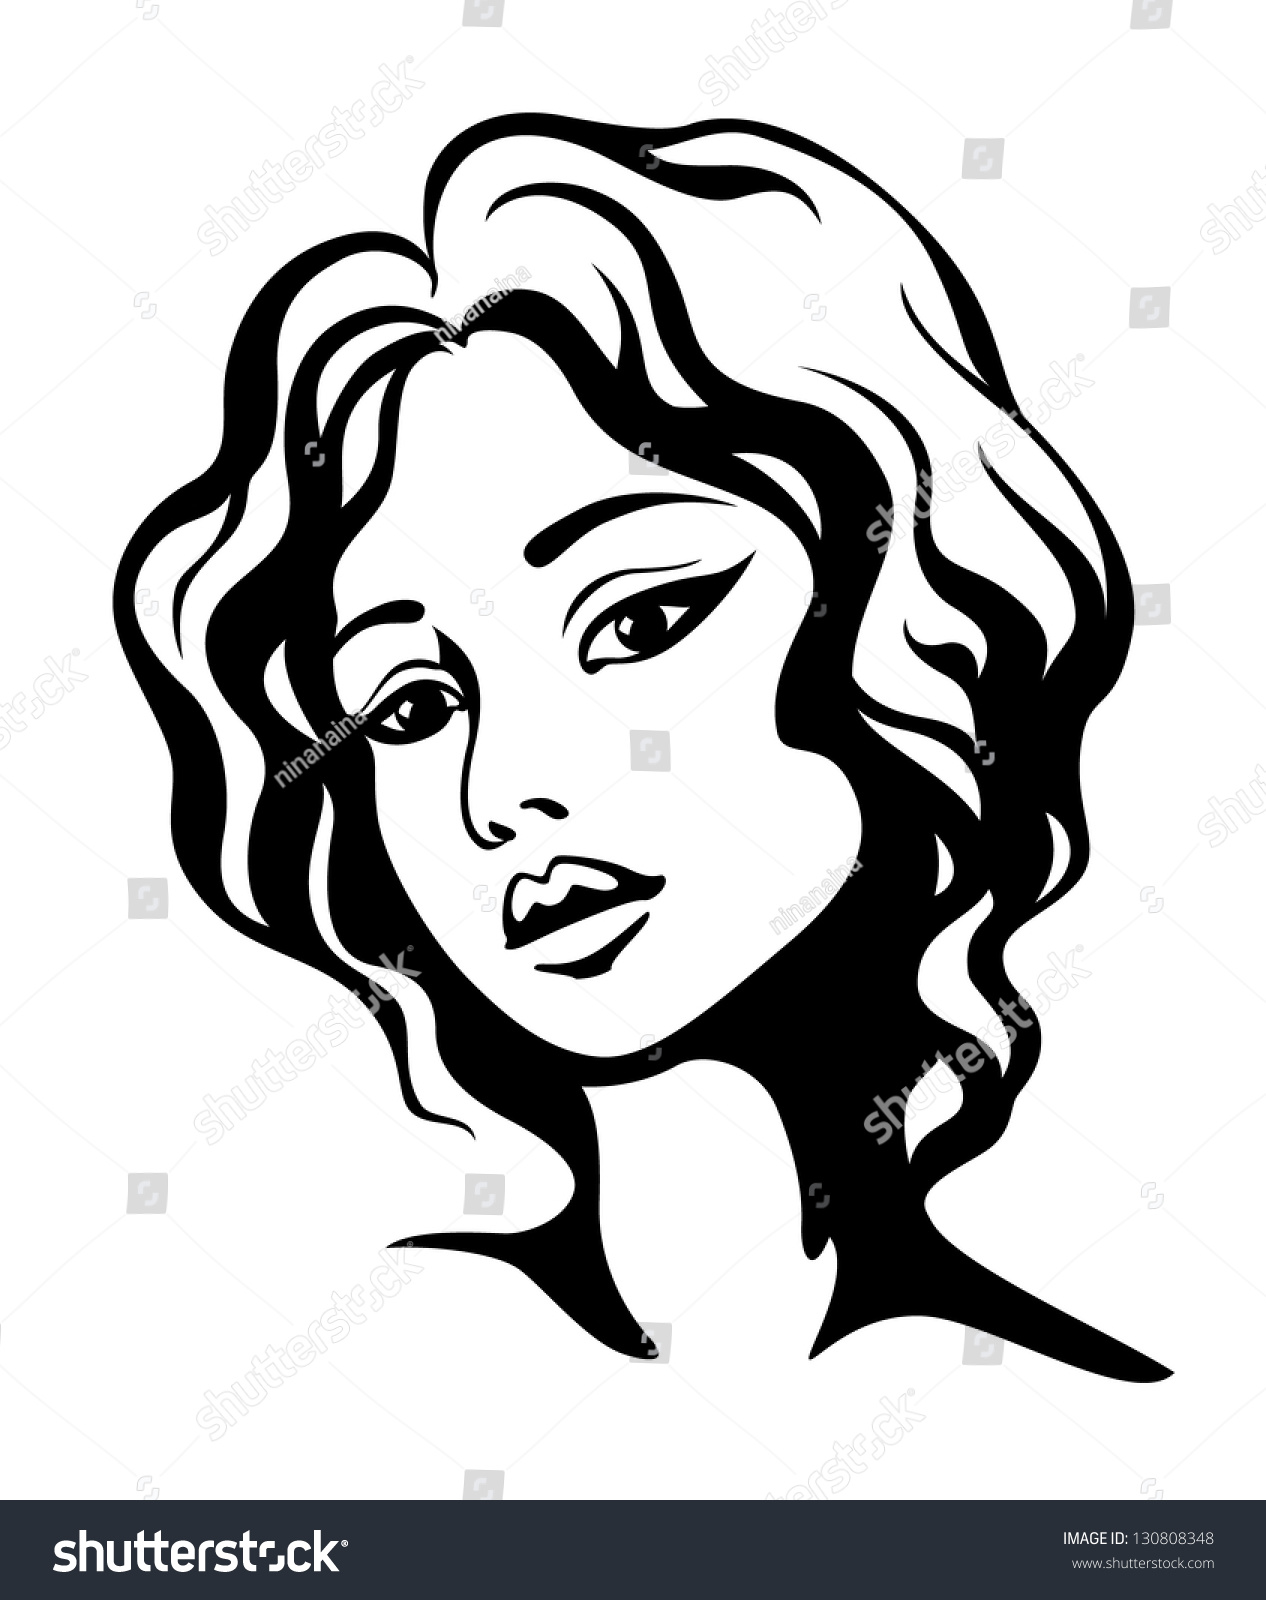 Woman Face Black Silhouette Stock Vector Illustration 130808348 ...